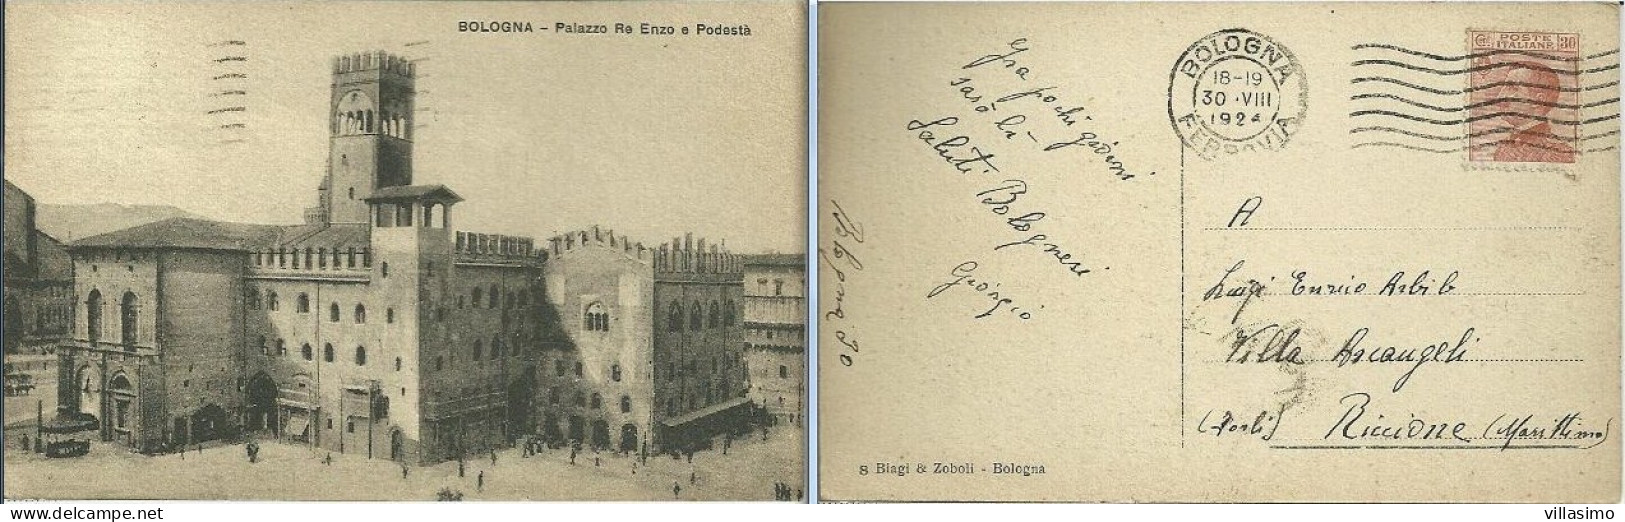 EMILIA ROMAGNA - BOLOGNA, PALAZZO RE ENZO E PODESTÀ - VG. 1924 - Bologna